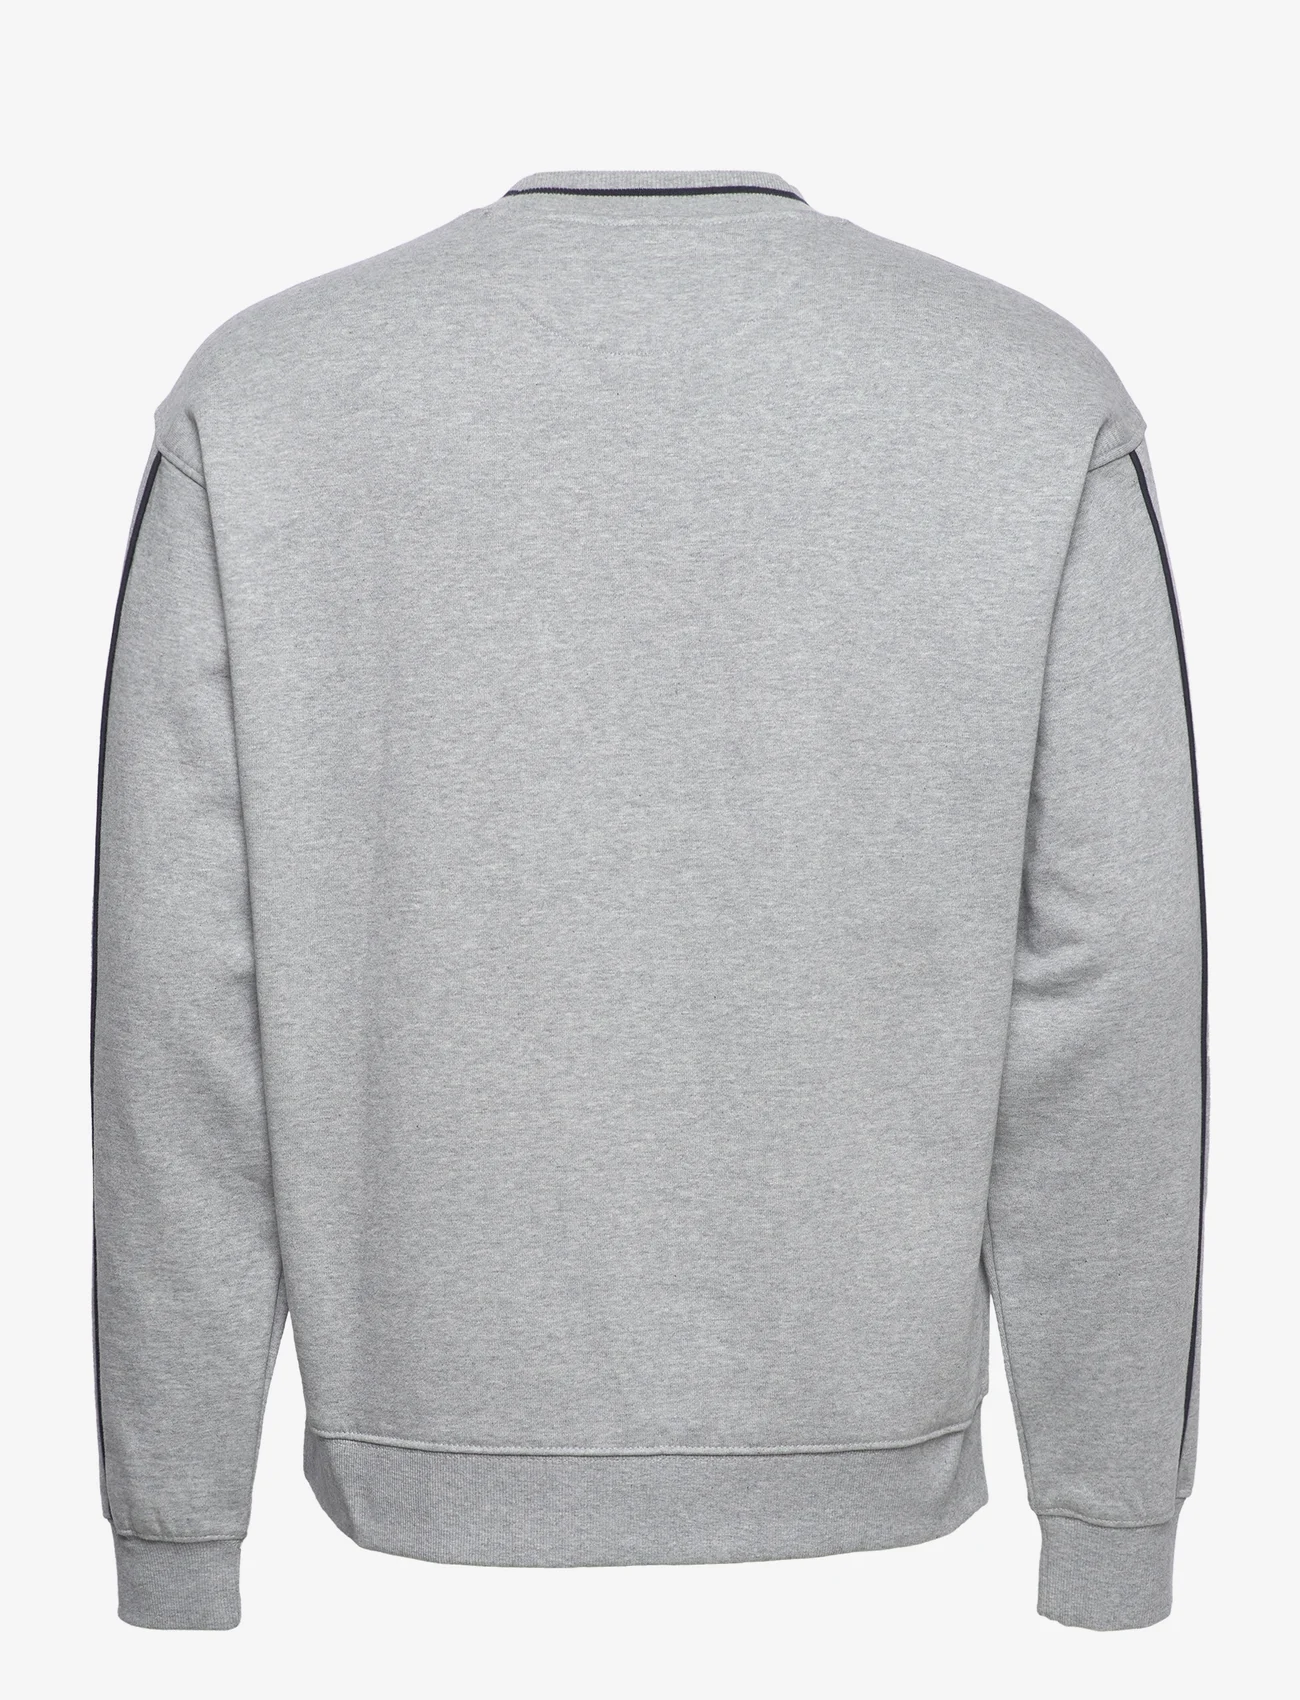 Farah - COURTNELL BRUSHBACK - sweatshirts - light grey marl - 1